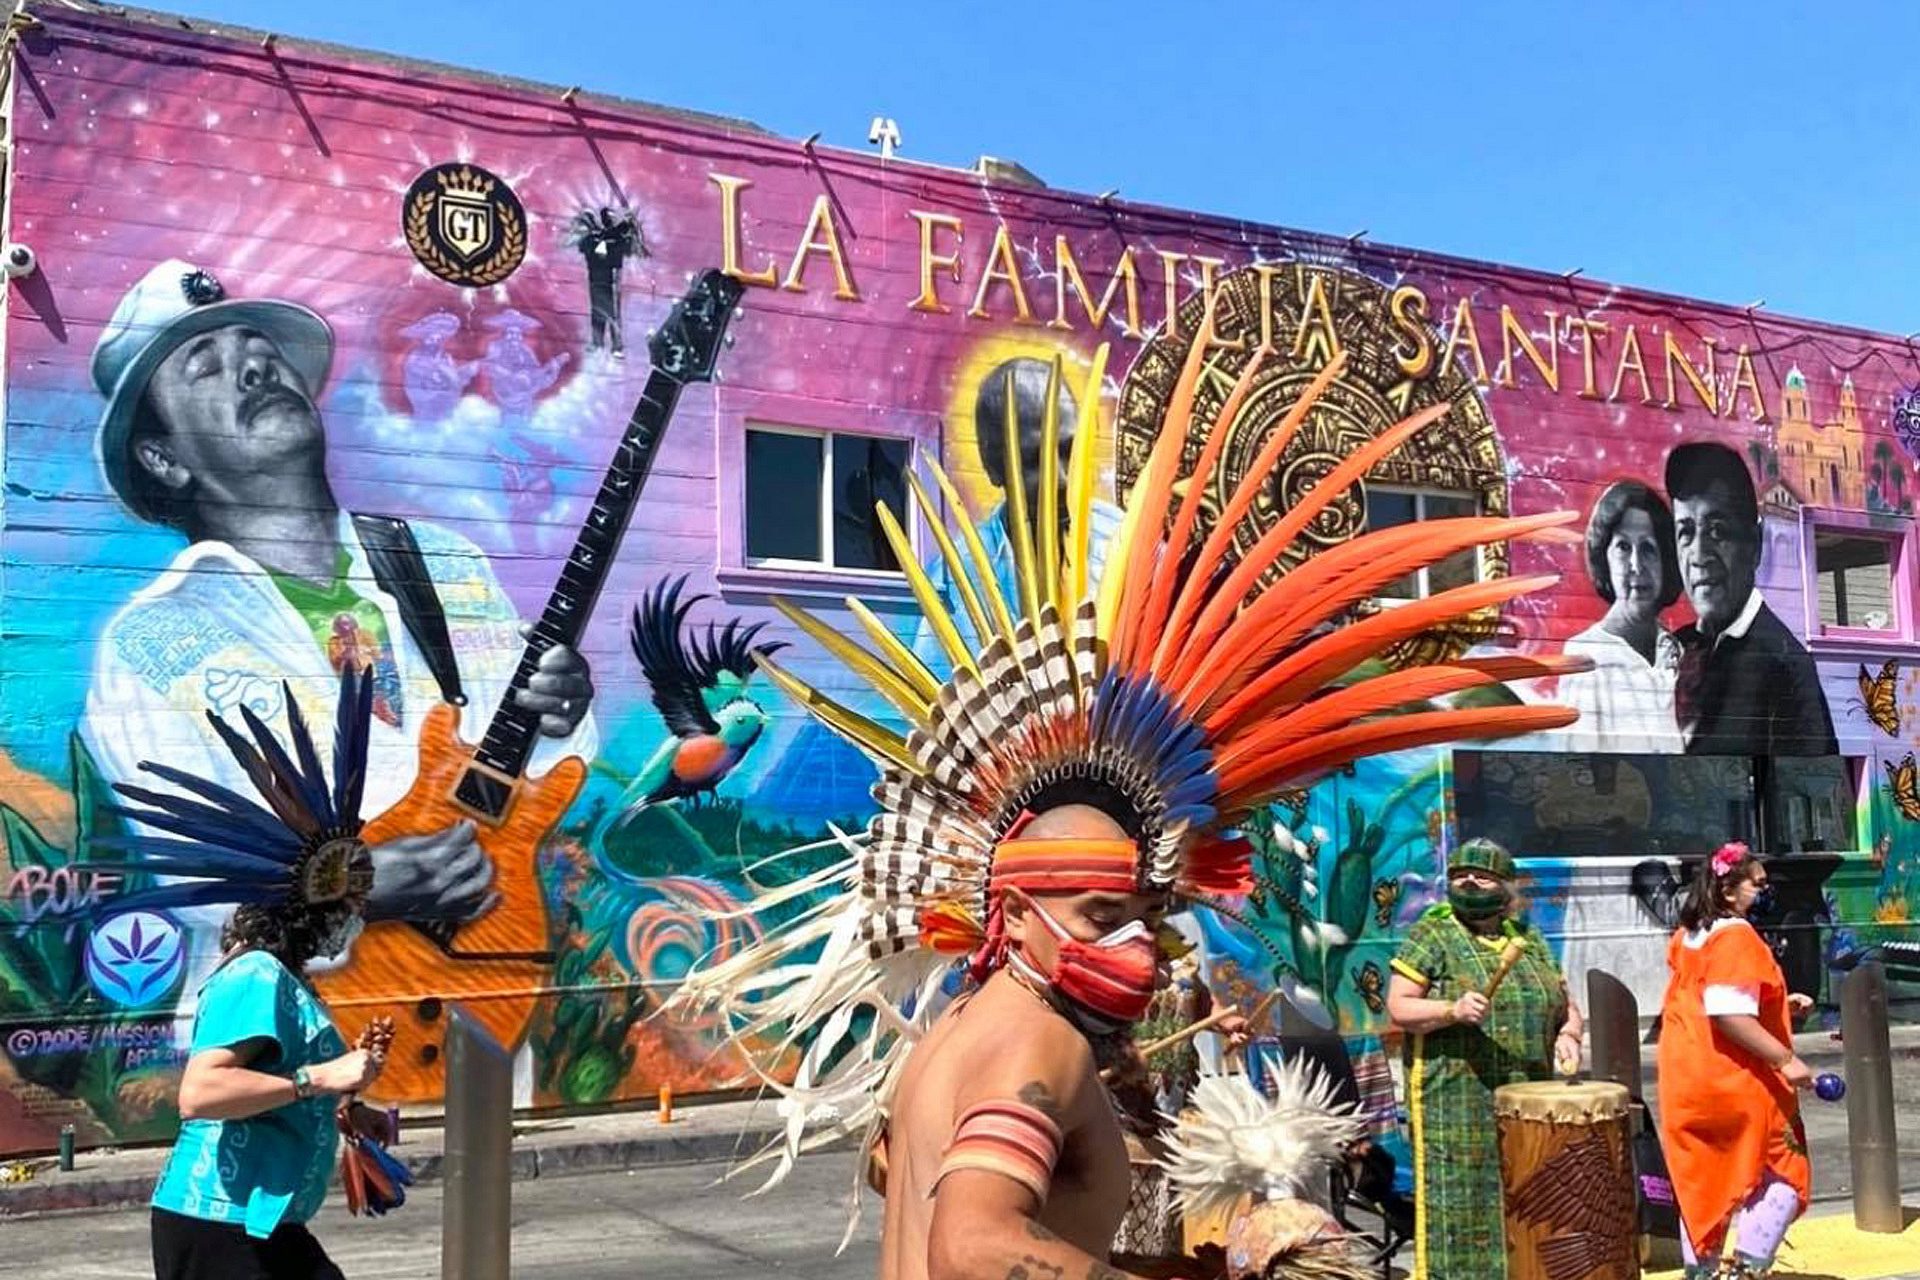 La Familia Santana: San Francisco Honors The Santana Family With Mural